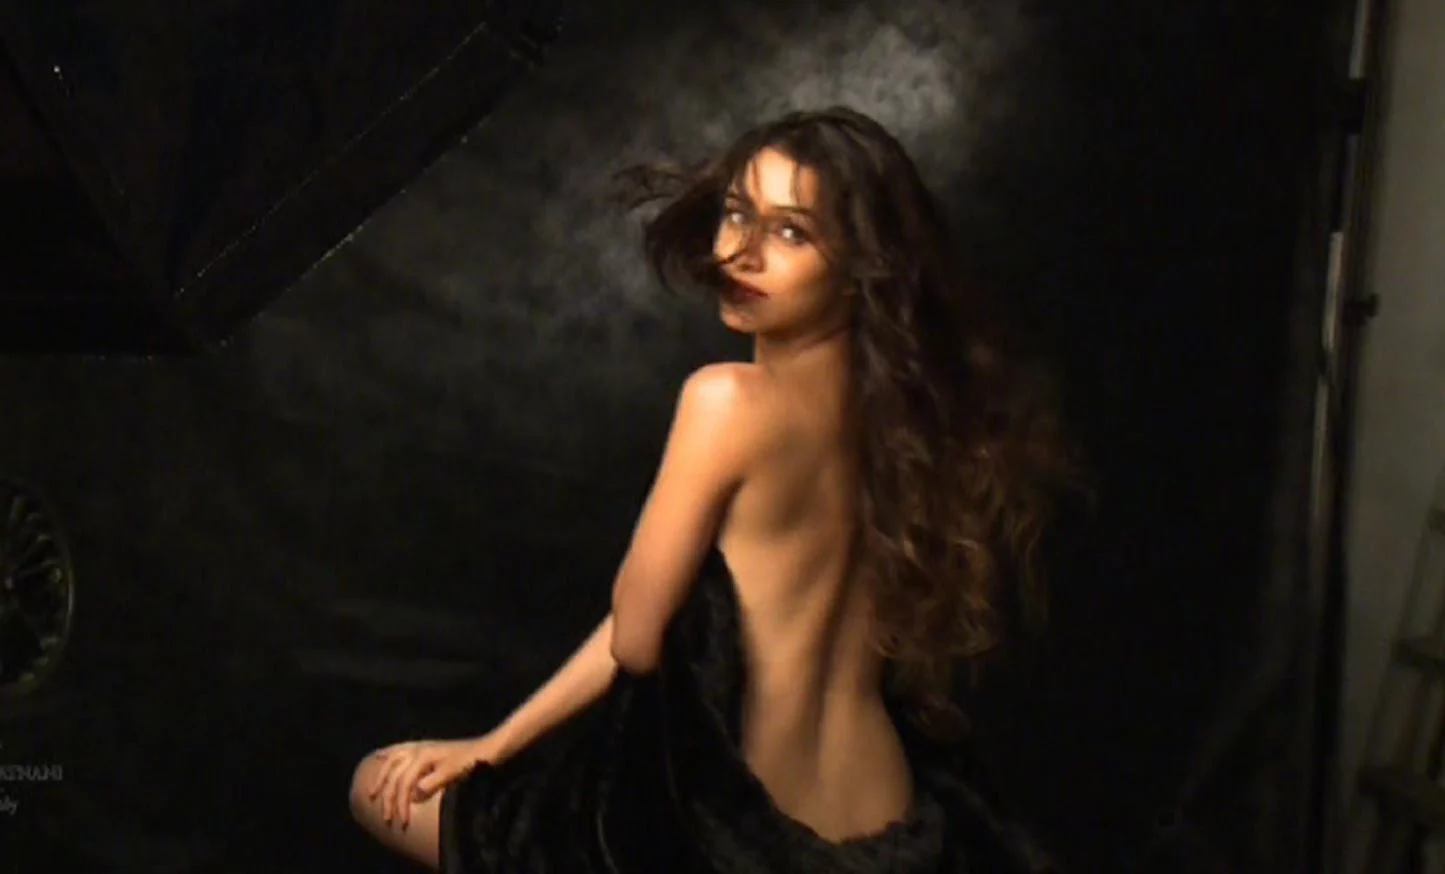 Bollywood Actress Topless Photoshoot : ক্যামেরার সামণে সত্যিই নগ্ন হয়েছেন যে ১০ অভিনেত্রী - West Bengal News 24